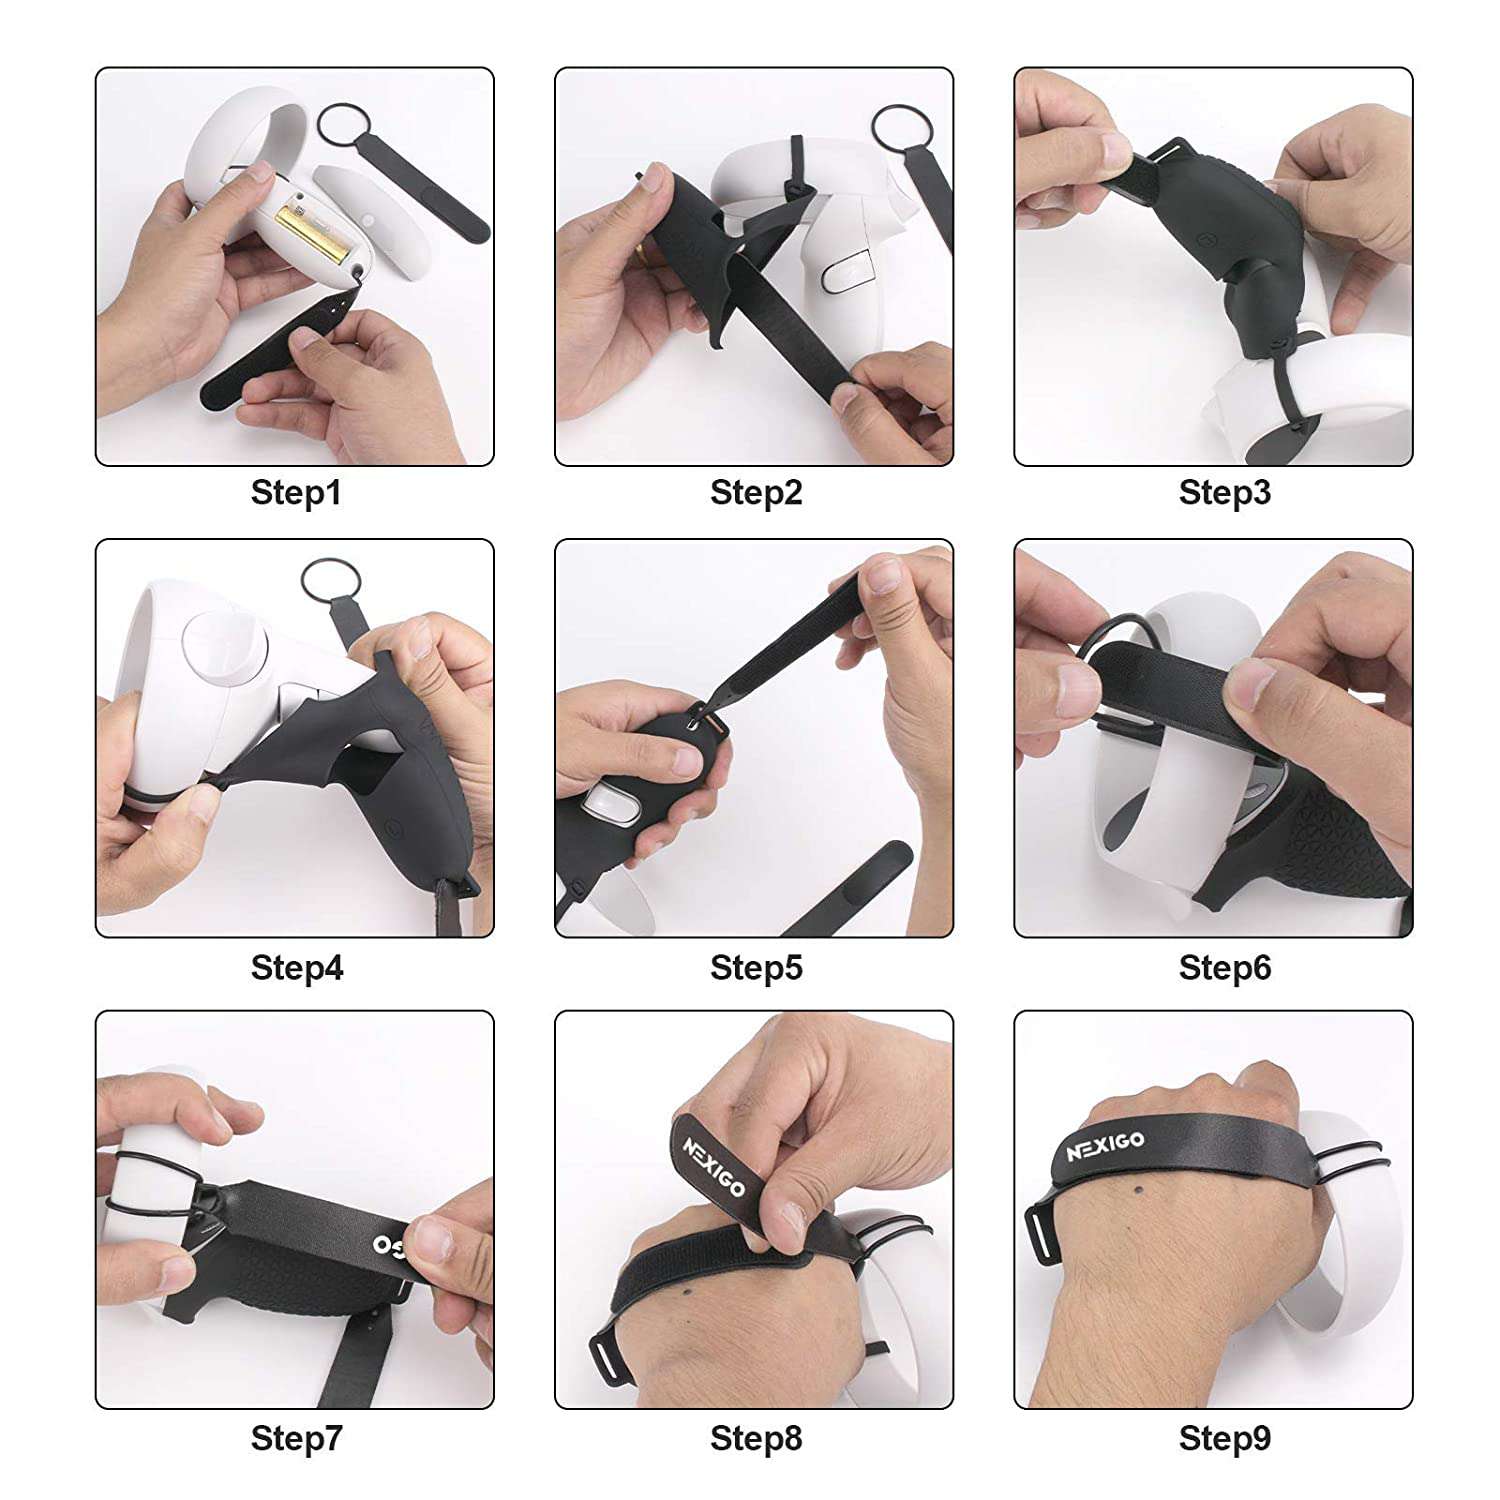 Installation of grip cover method 1 tutorial